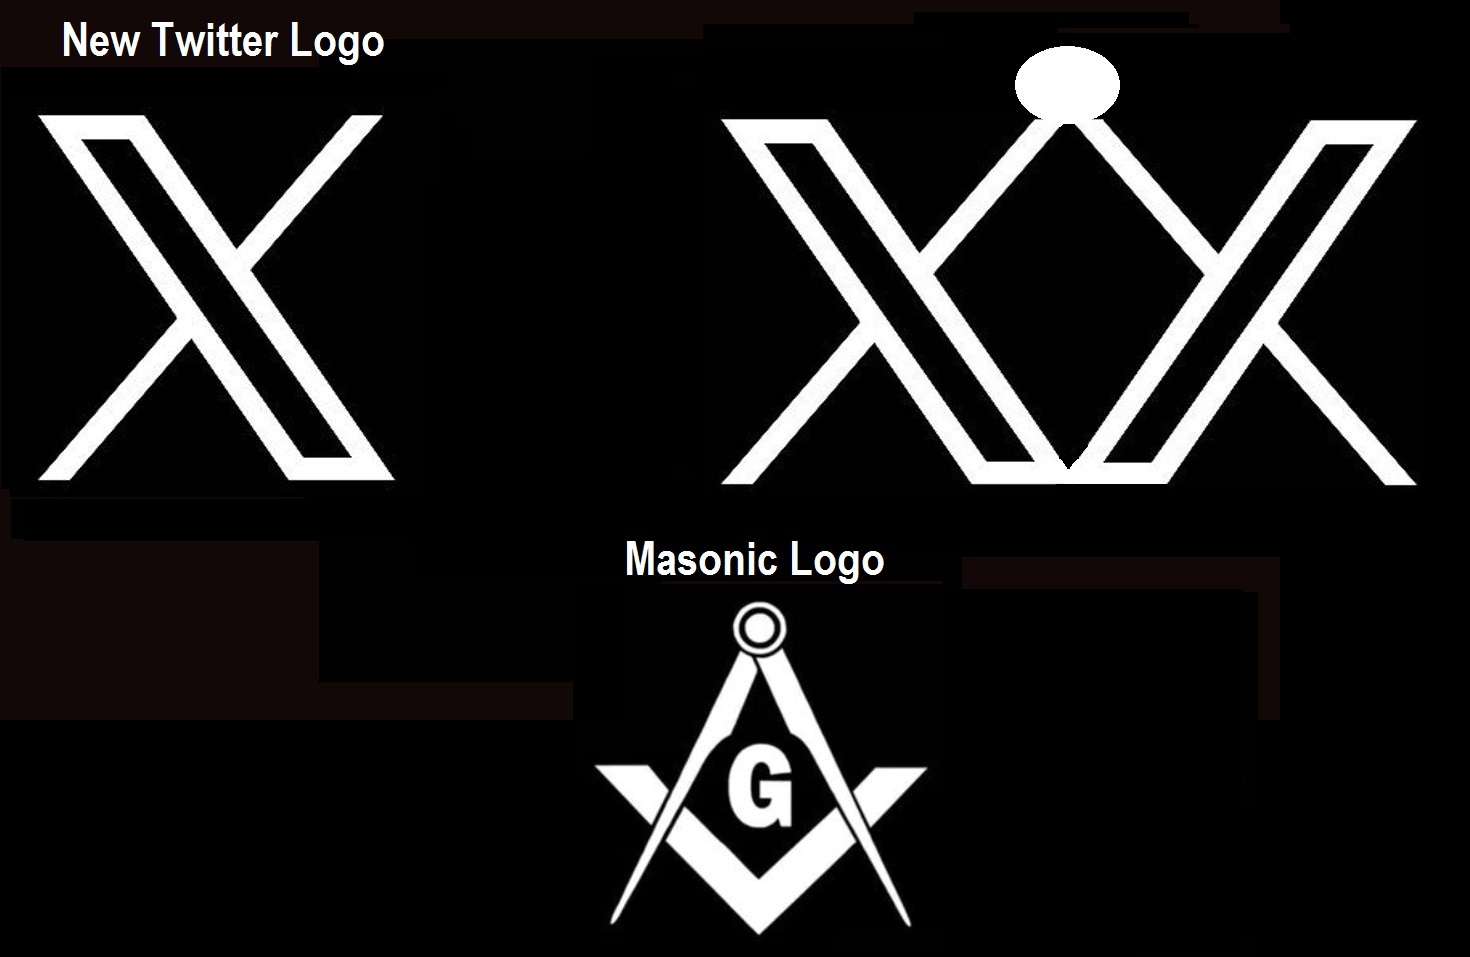 Twitter-logo-x-masonic-logo-3.jpg